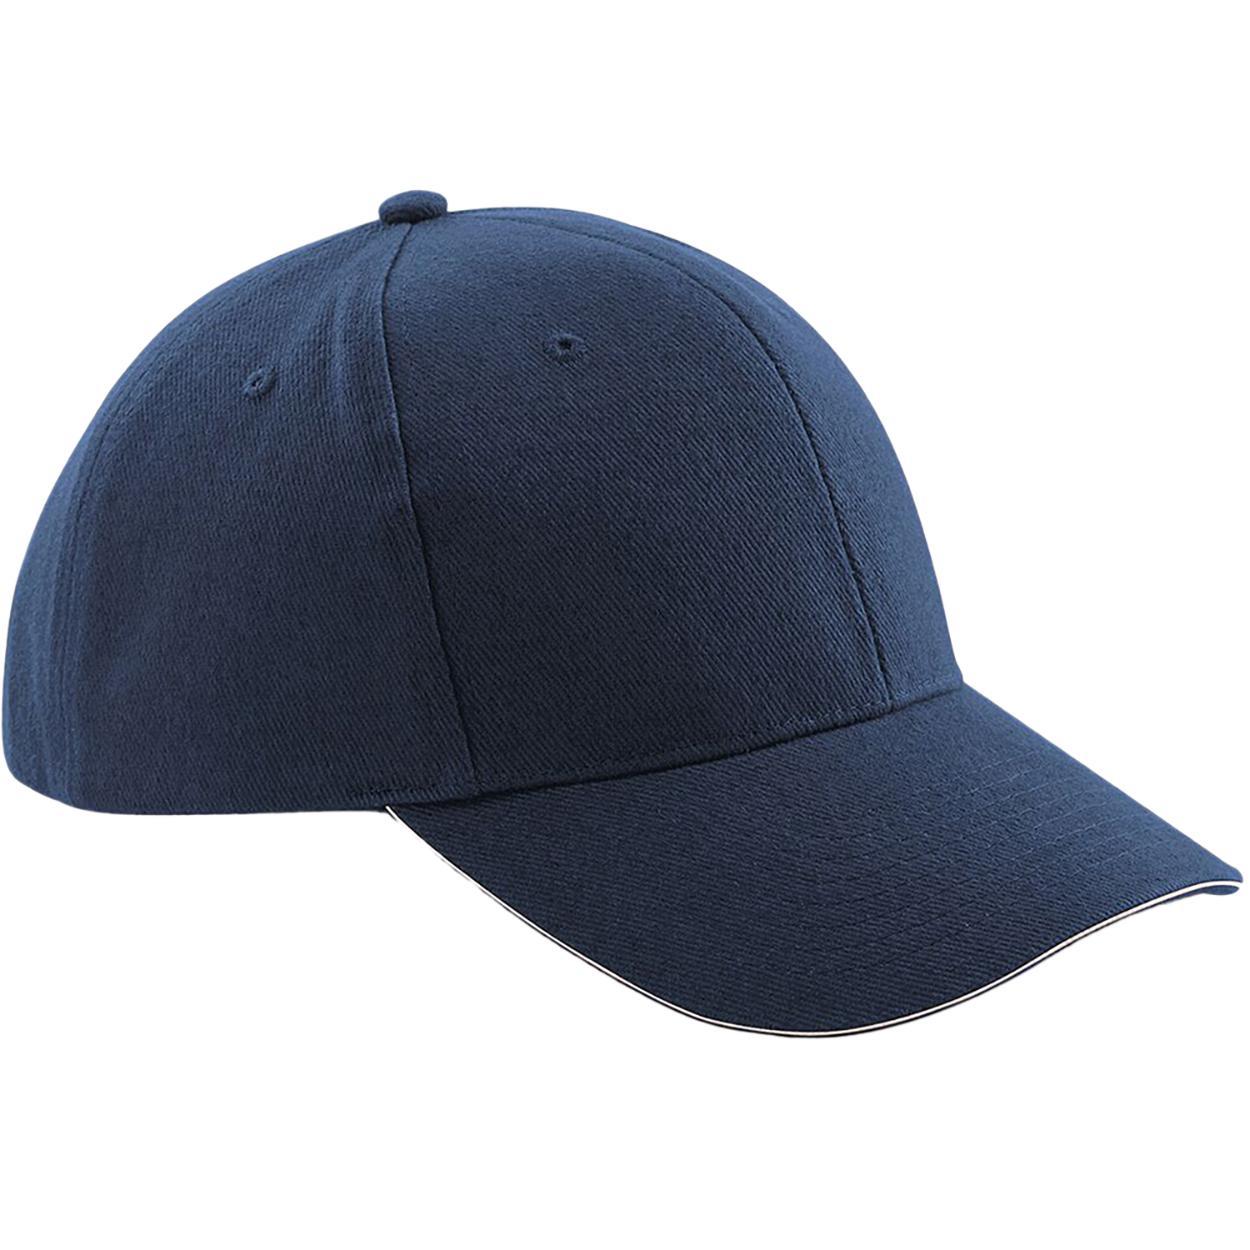 Beechfield Unisex Pro-Style Heavy Brushed Cotton Baseball Cap / Headwear (French Navy/Stone) (One Size)